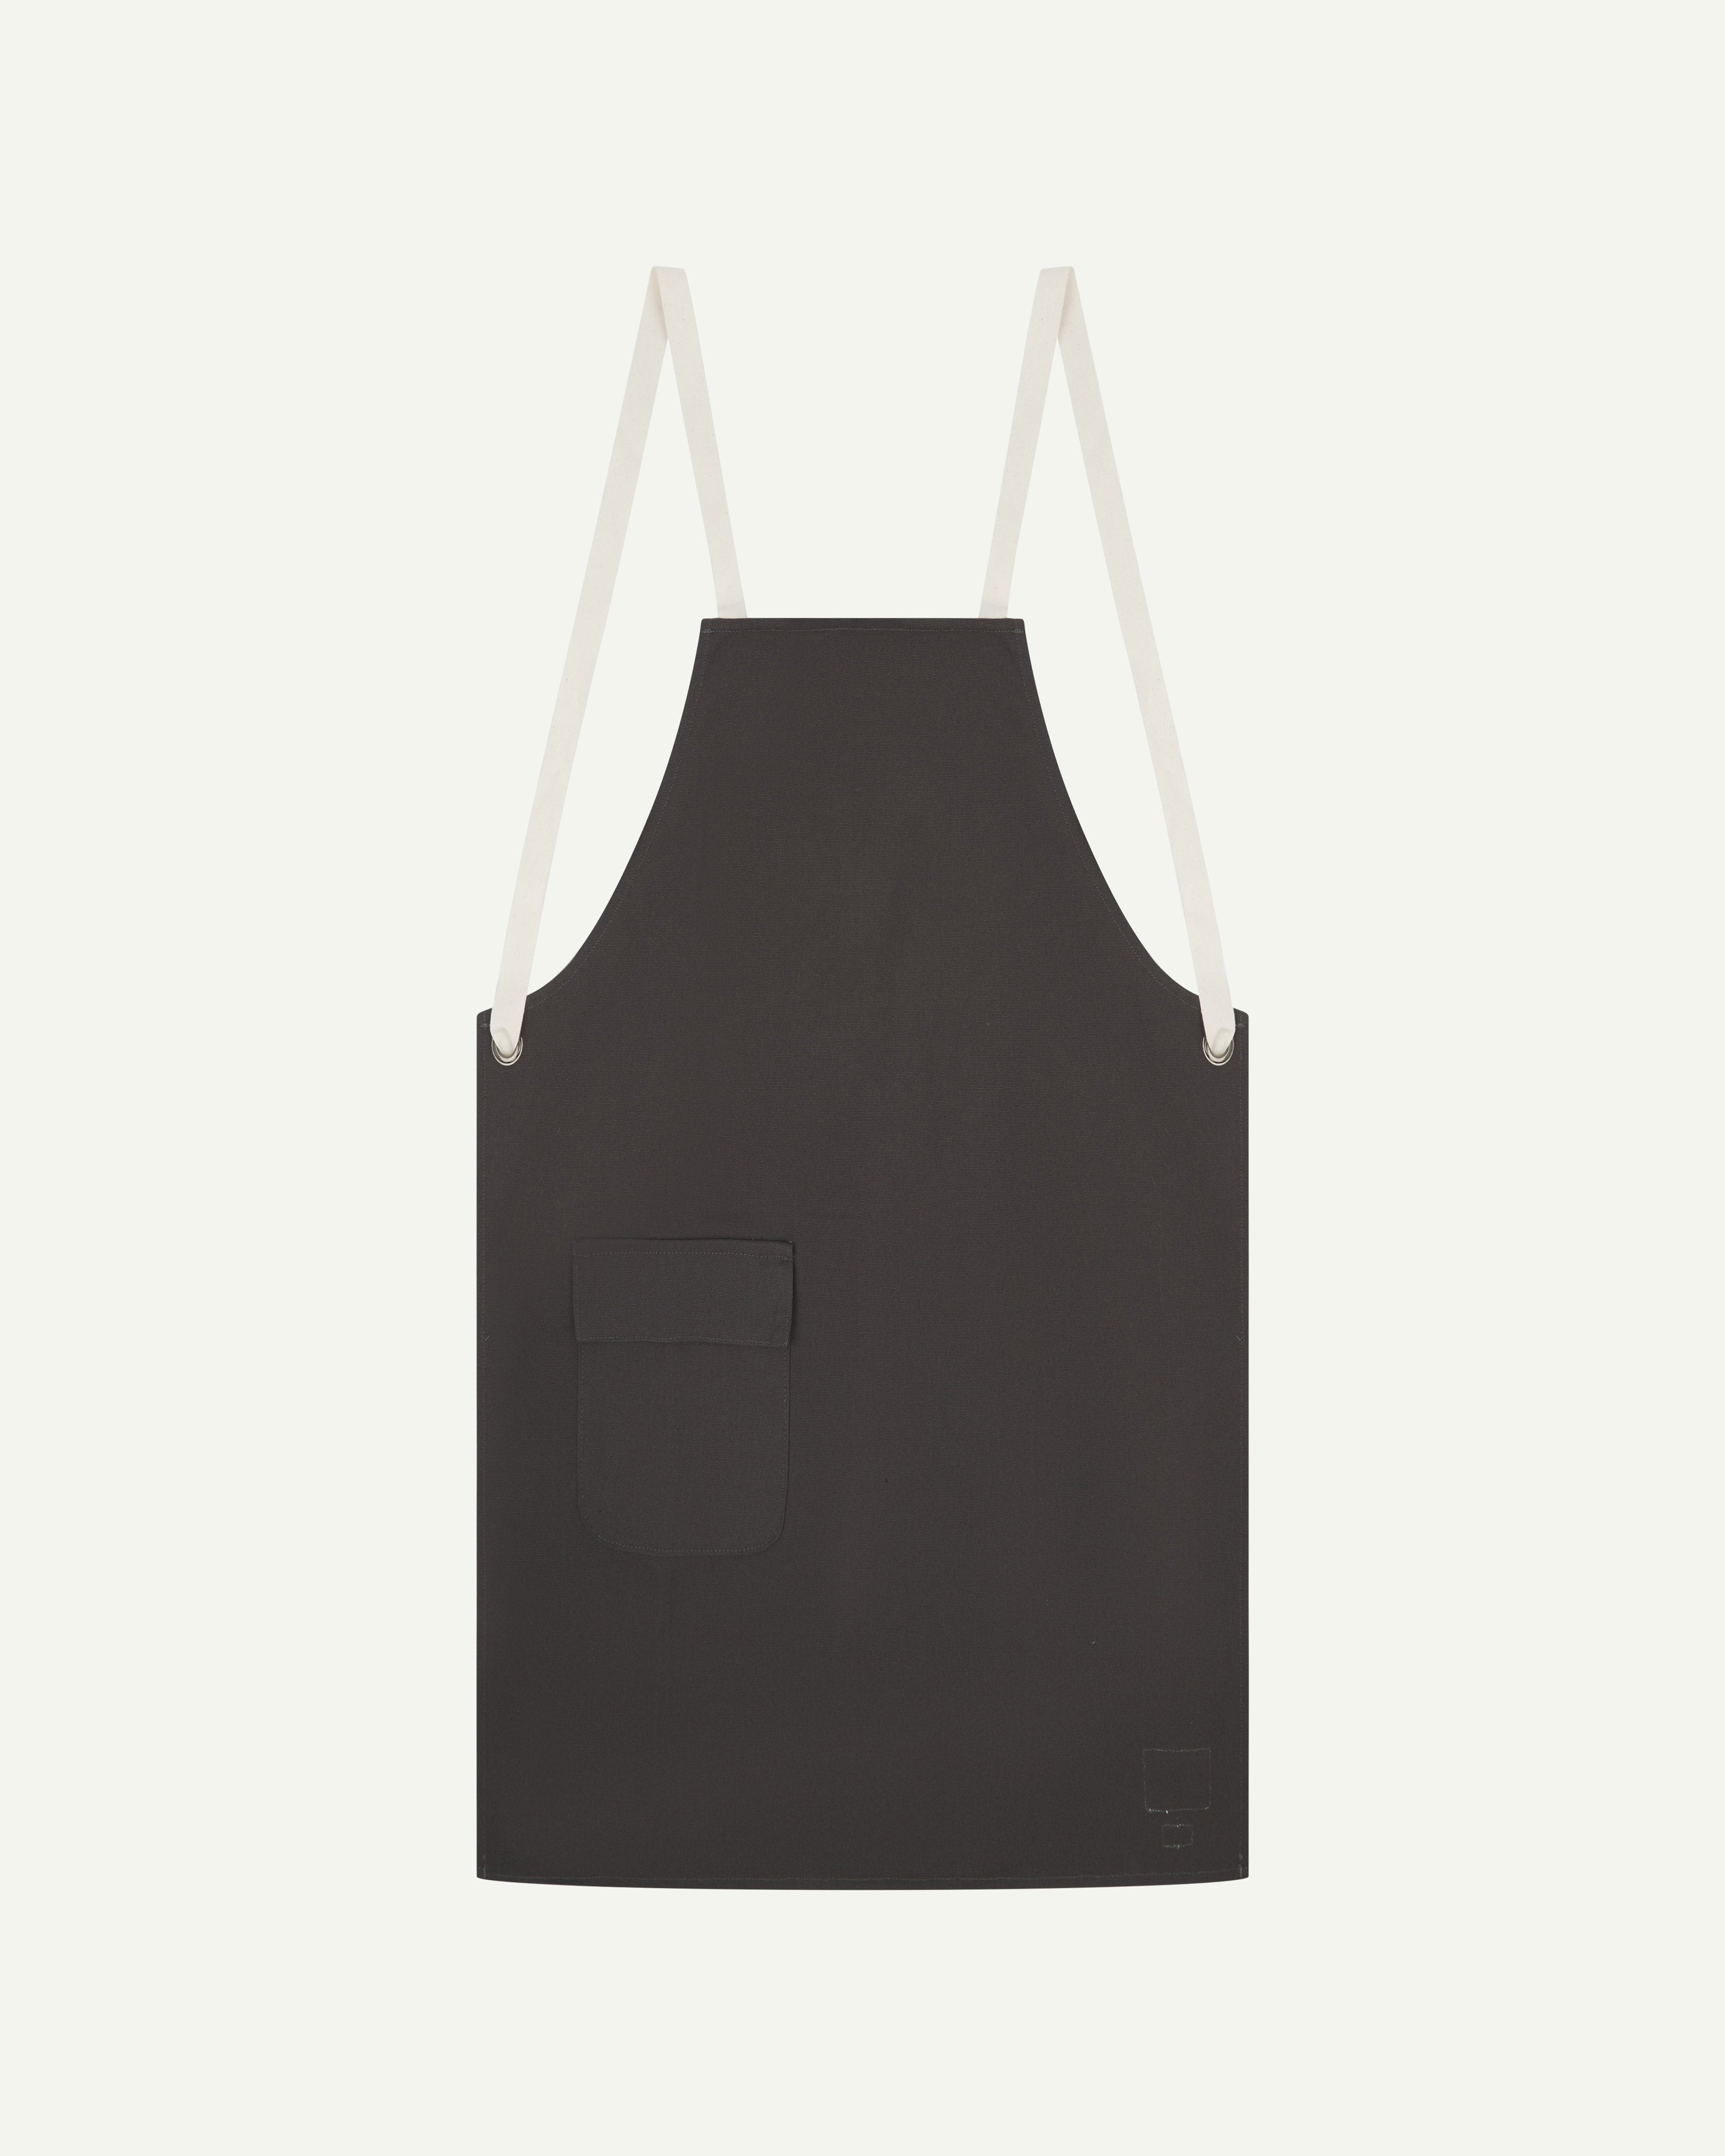 #9001 canvas tie-back apron - charcoal